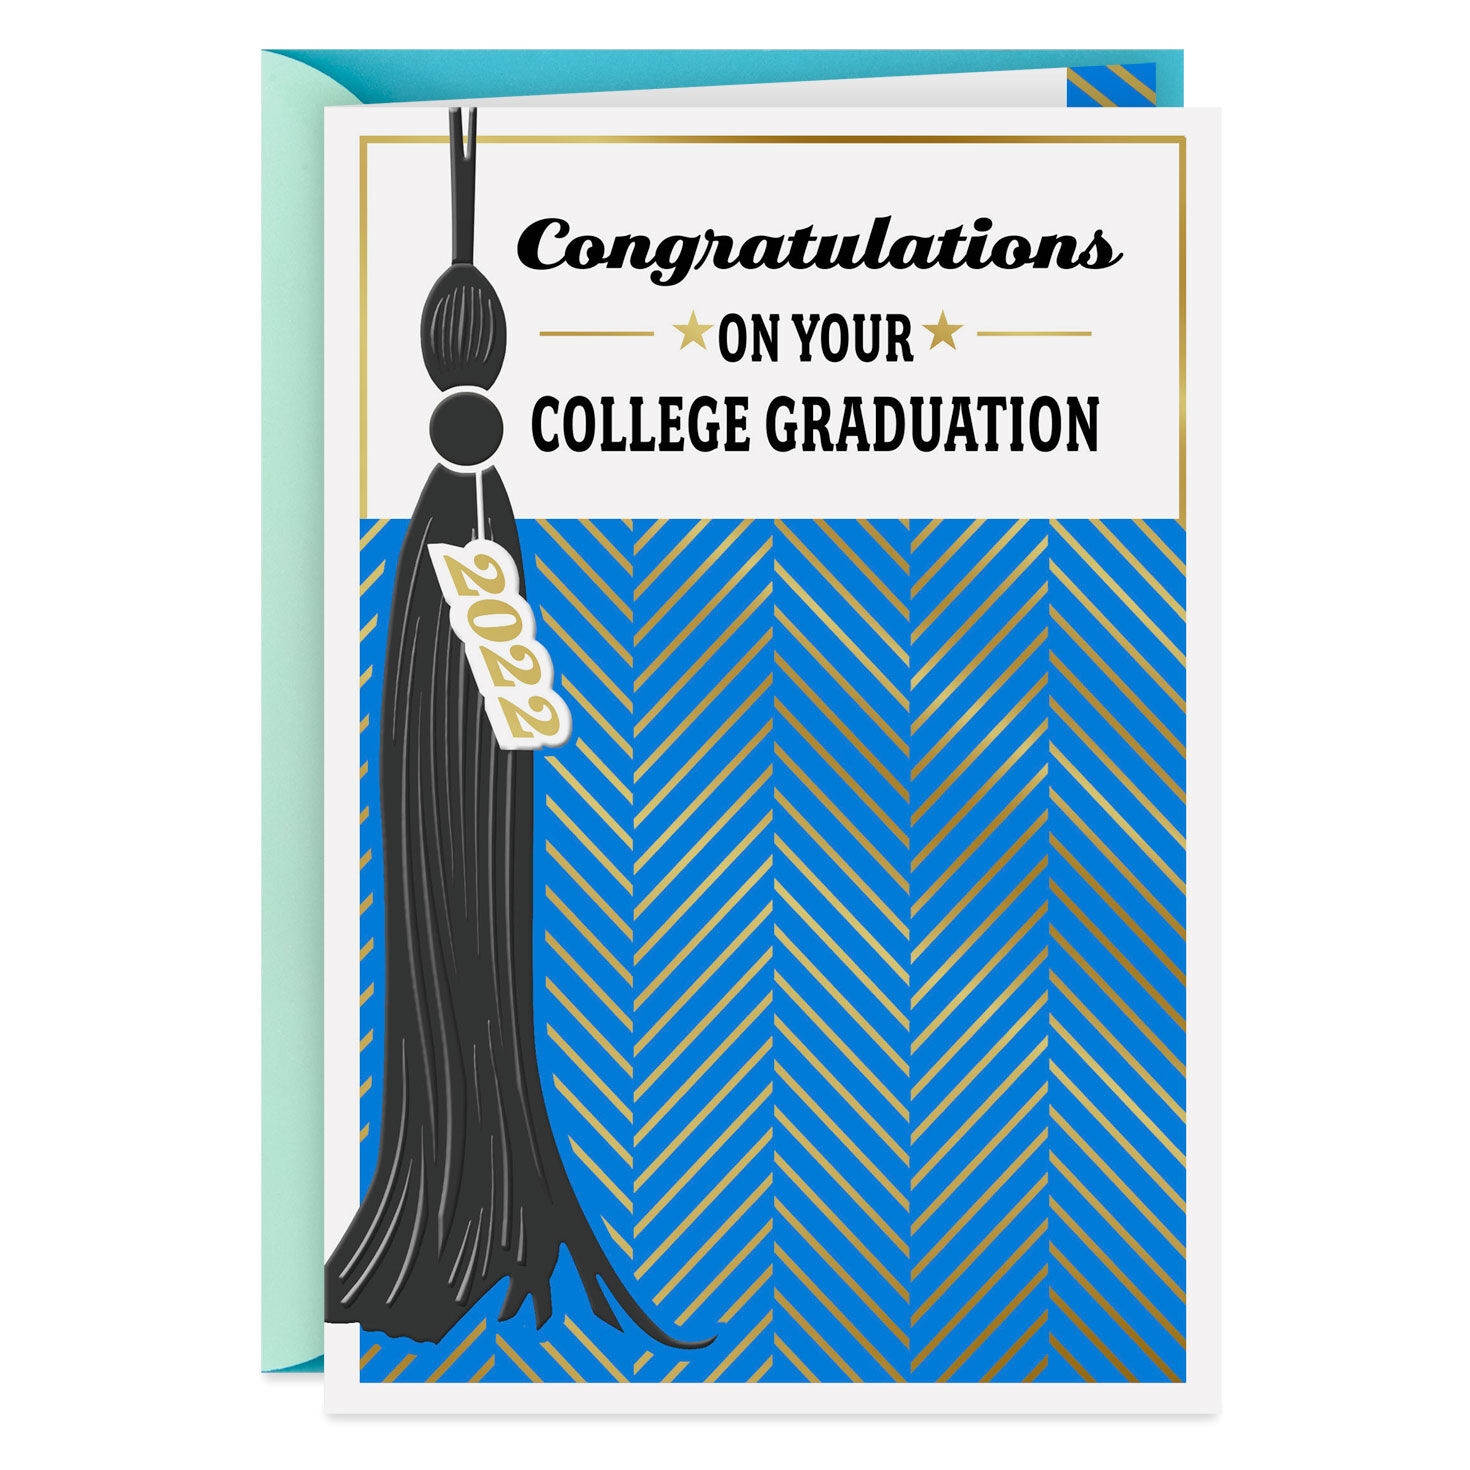 YOU DESERVE IT High School College G33 Hallmark GRADUATION Card Congratulations